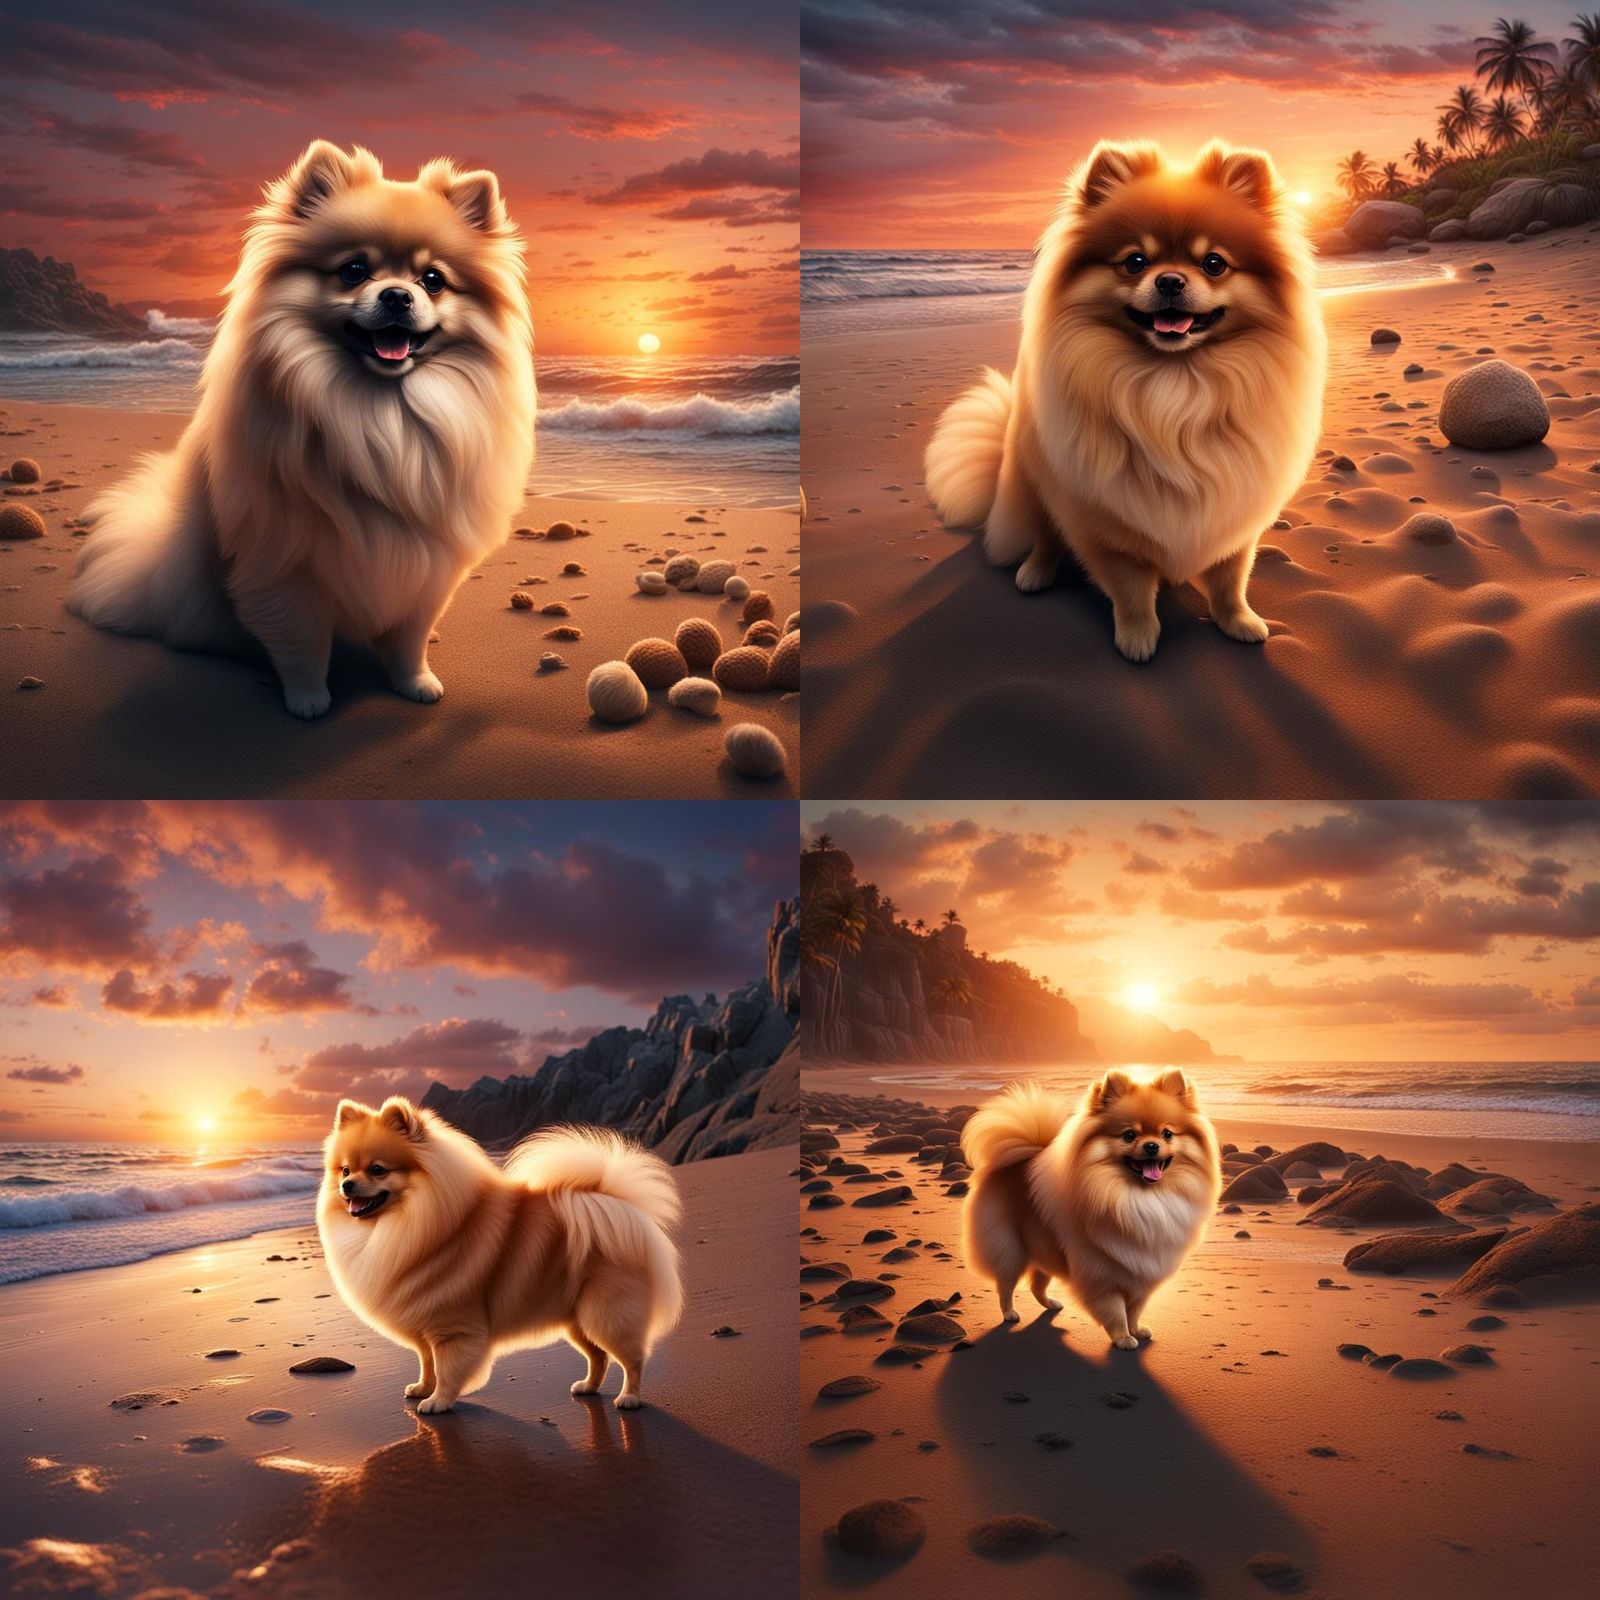 Pomeranian on a beach with sunset